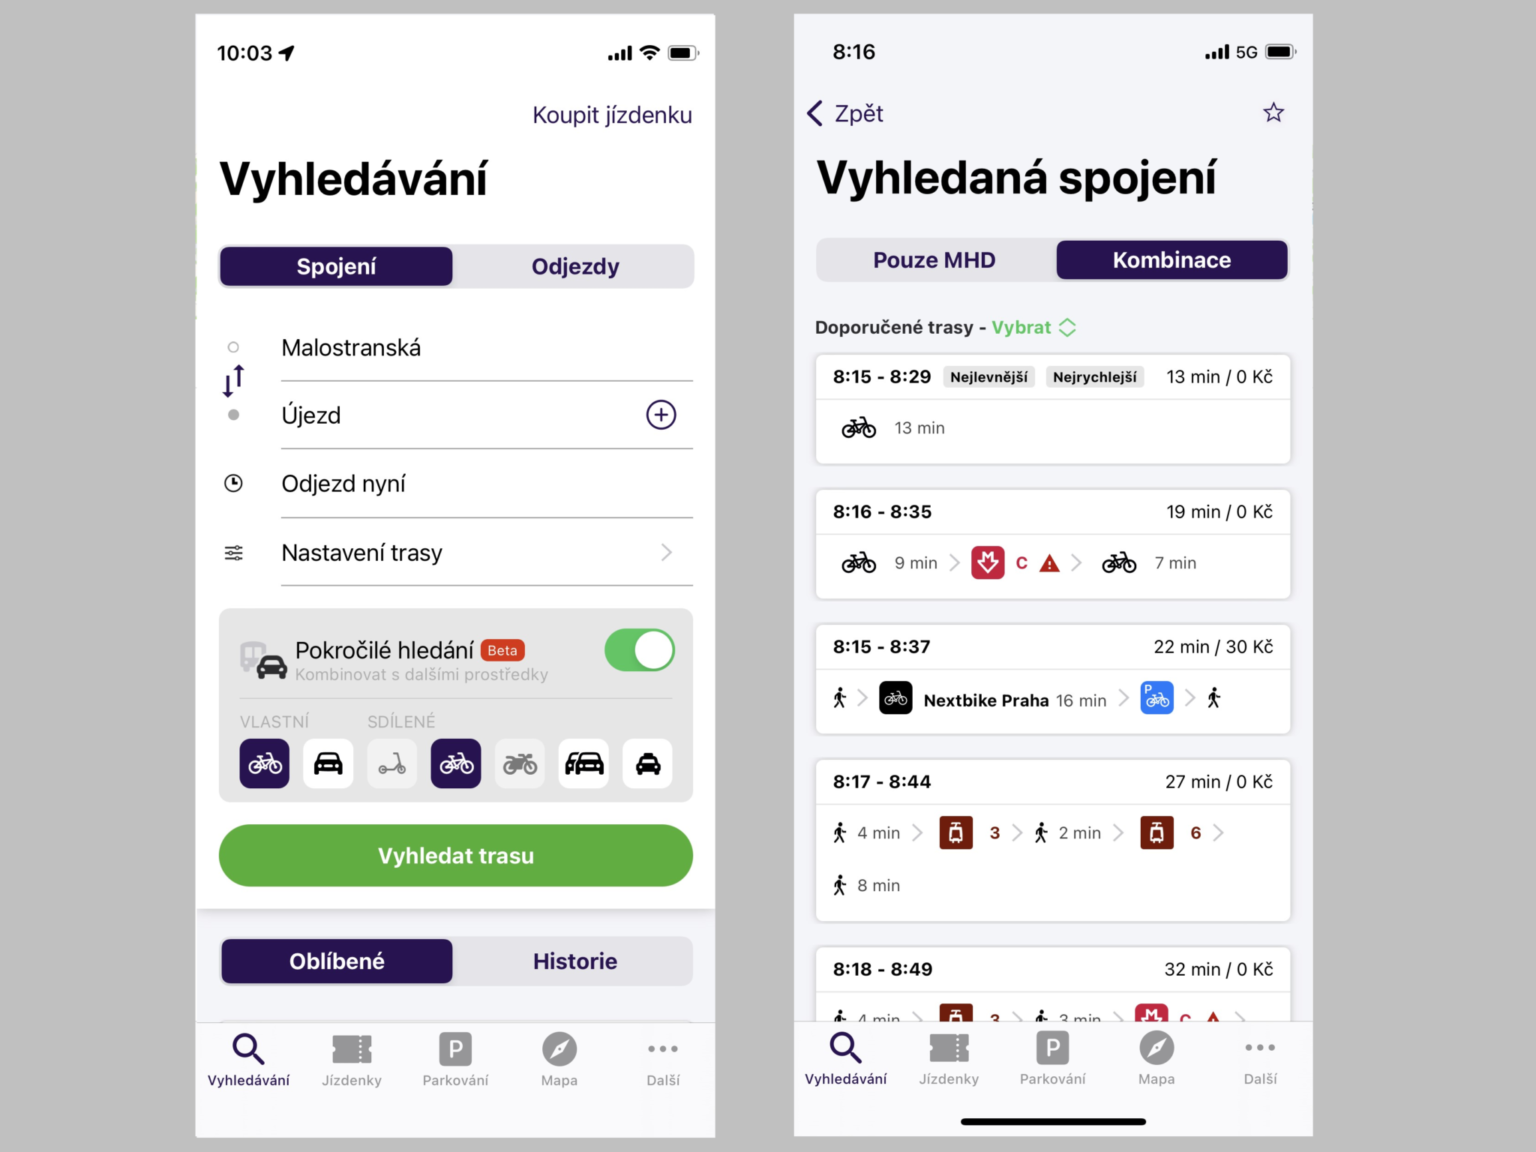 The PID Lítačka application will recommend combinations of various modes of transport. Zdroj: PID Lítačka / Koláž MNK